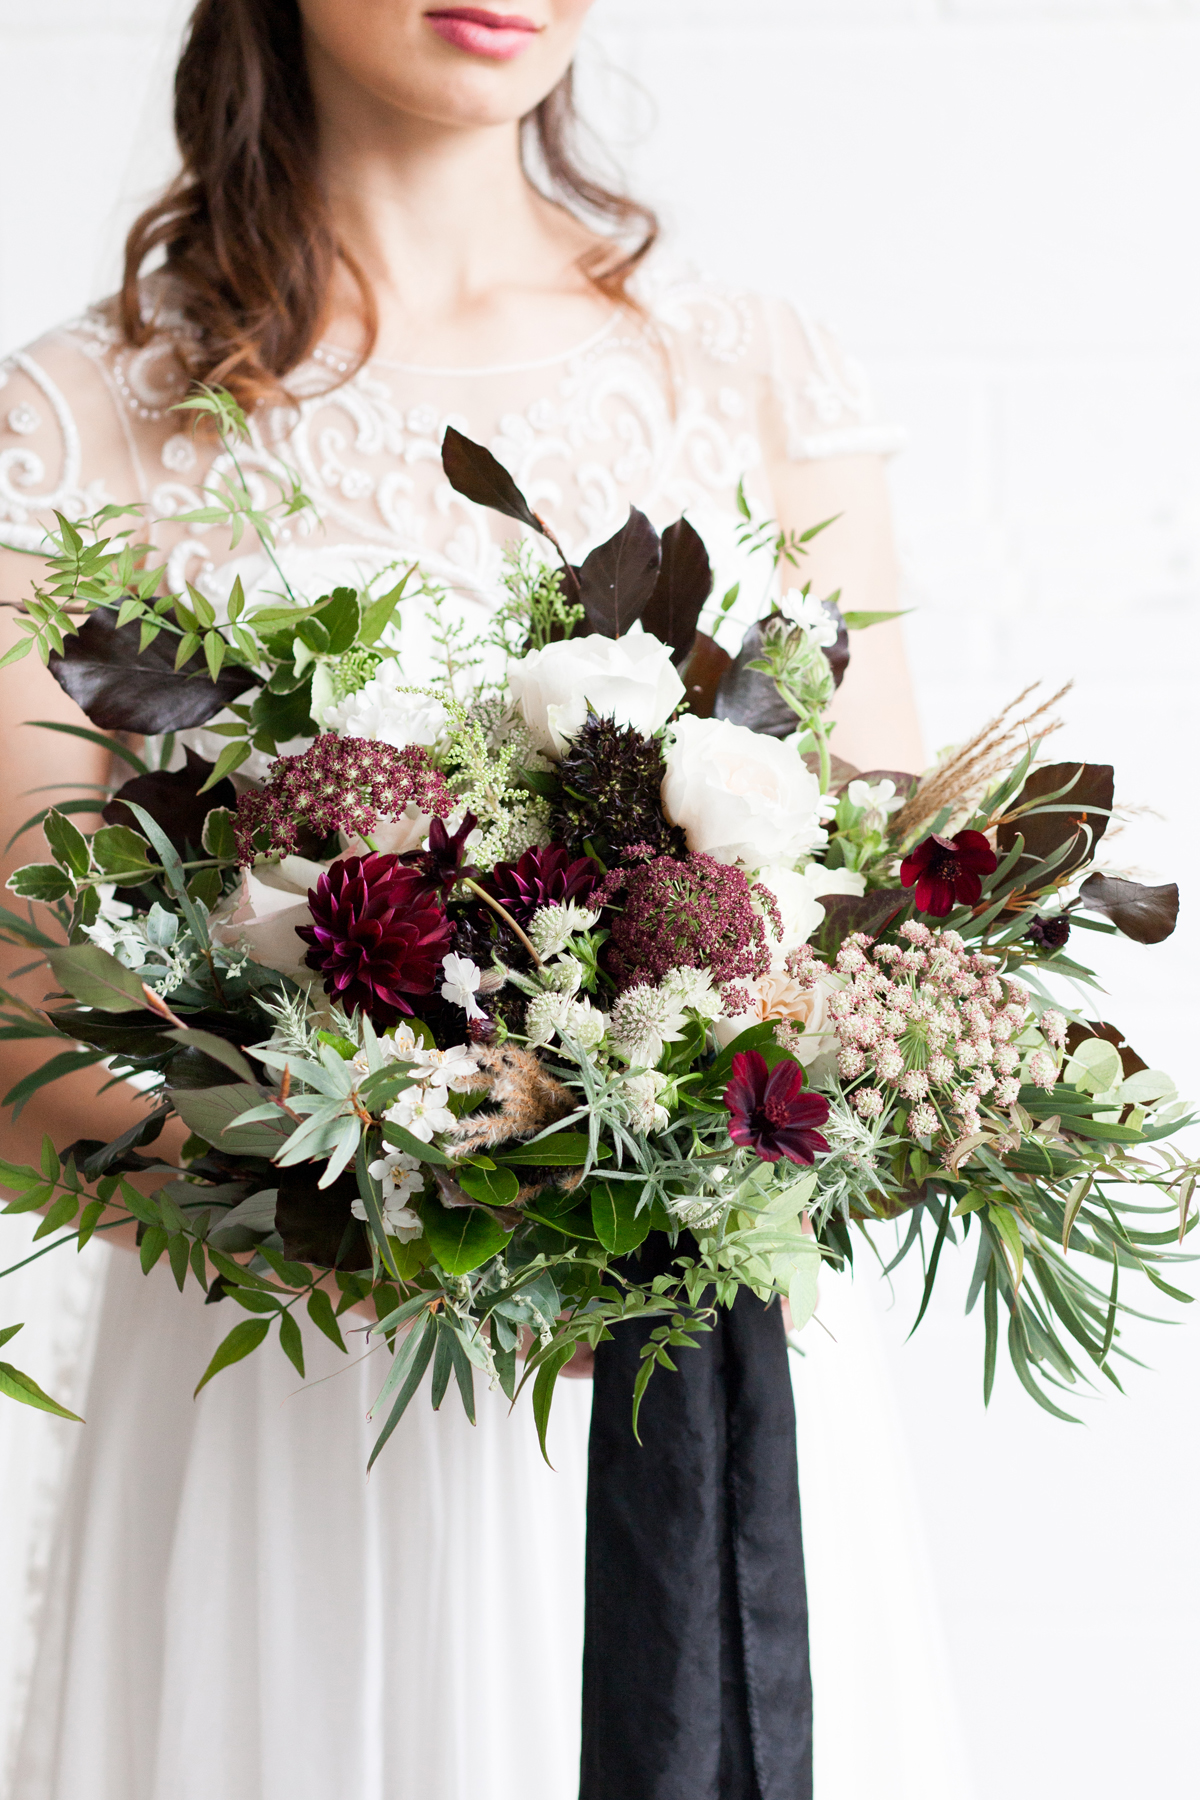 Lose Burgundy Bridal Bouquet - Industrial Warehouse Wedding -- The Overwhelmed Bride - Wedding Blog 